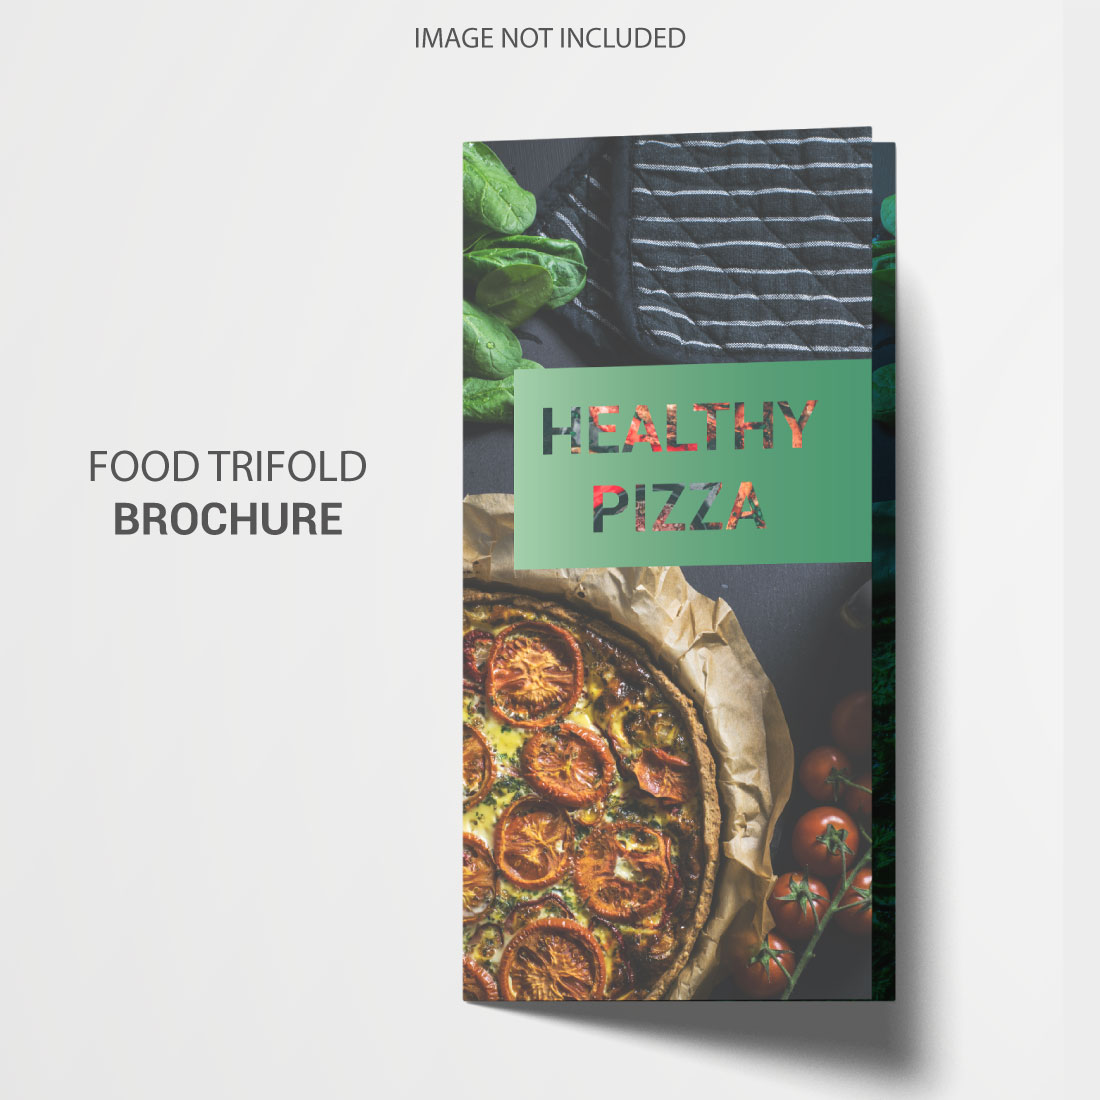 Trifold brochure food menu preview image.